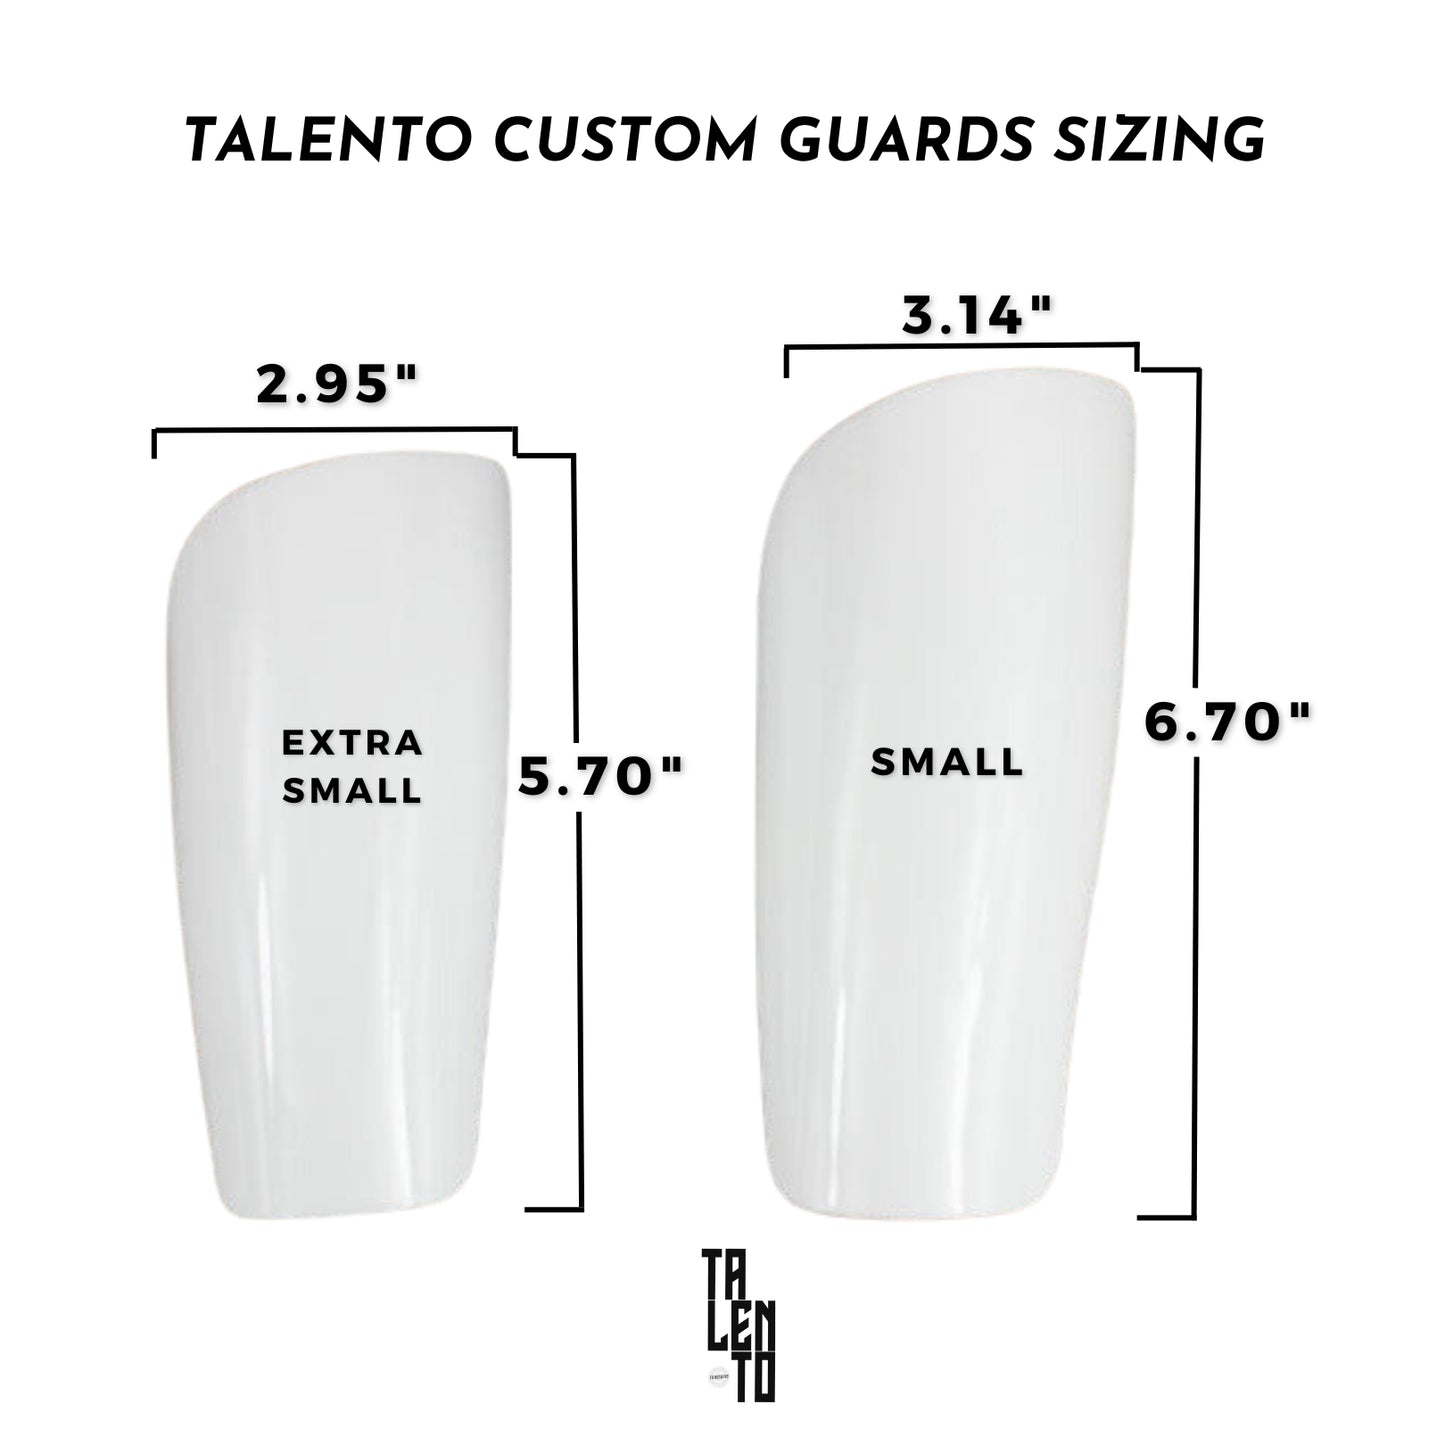 Talento Custom Guards